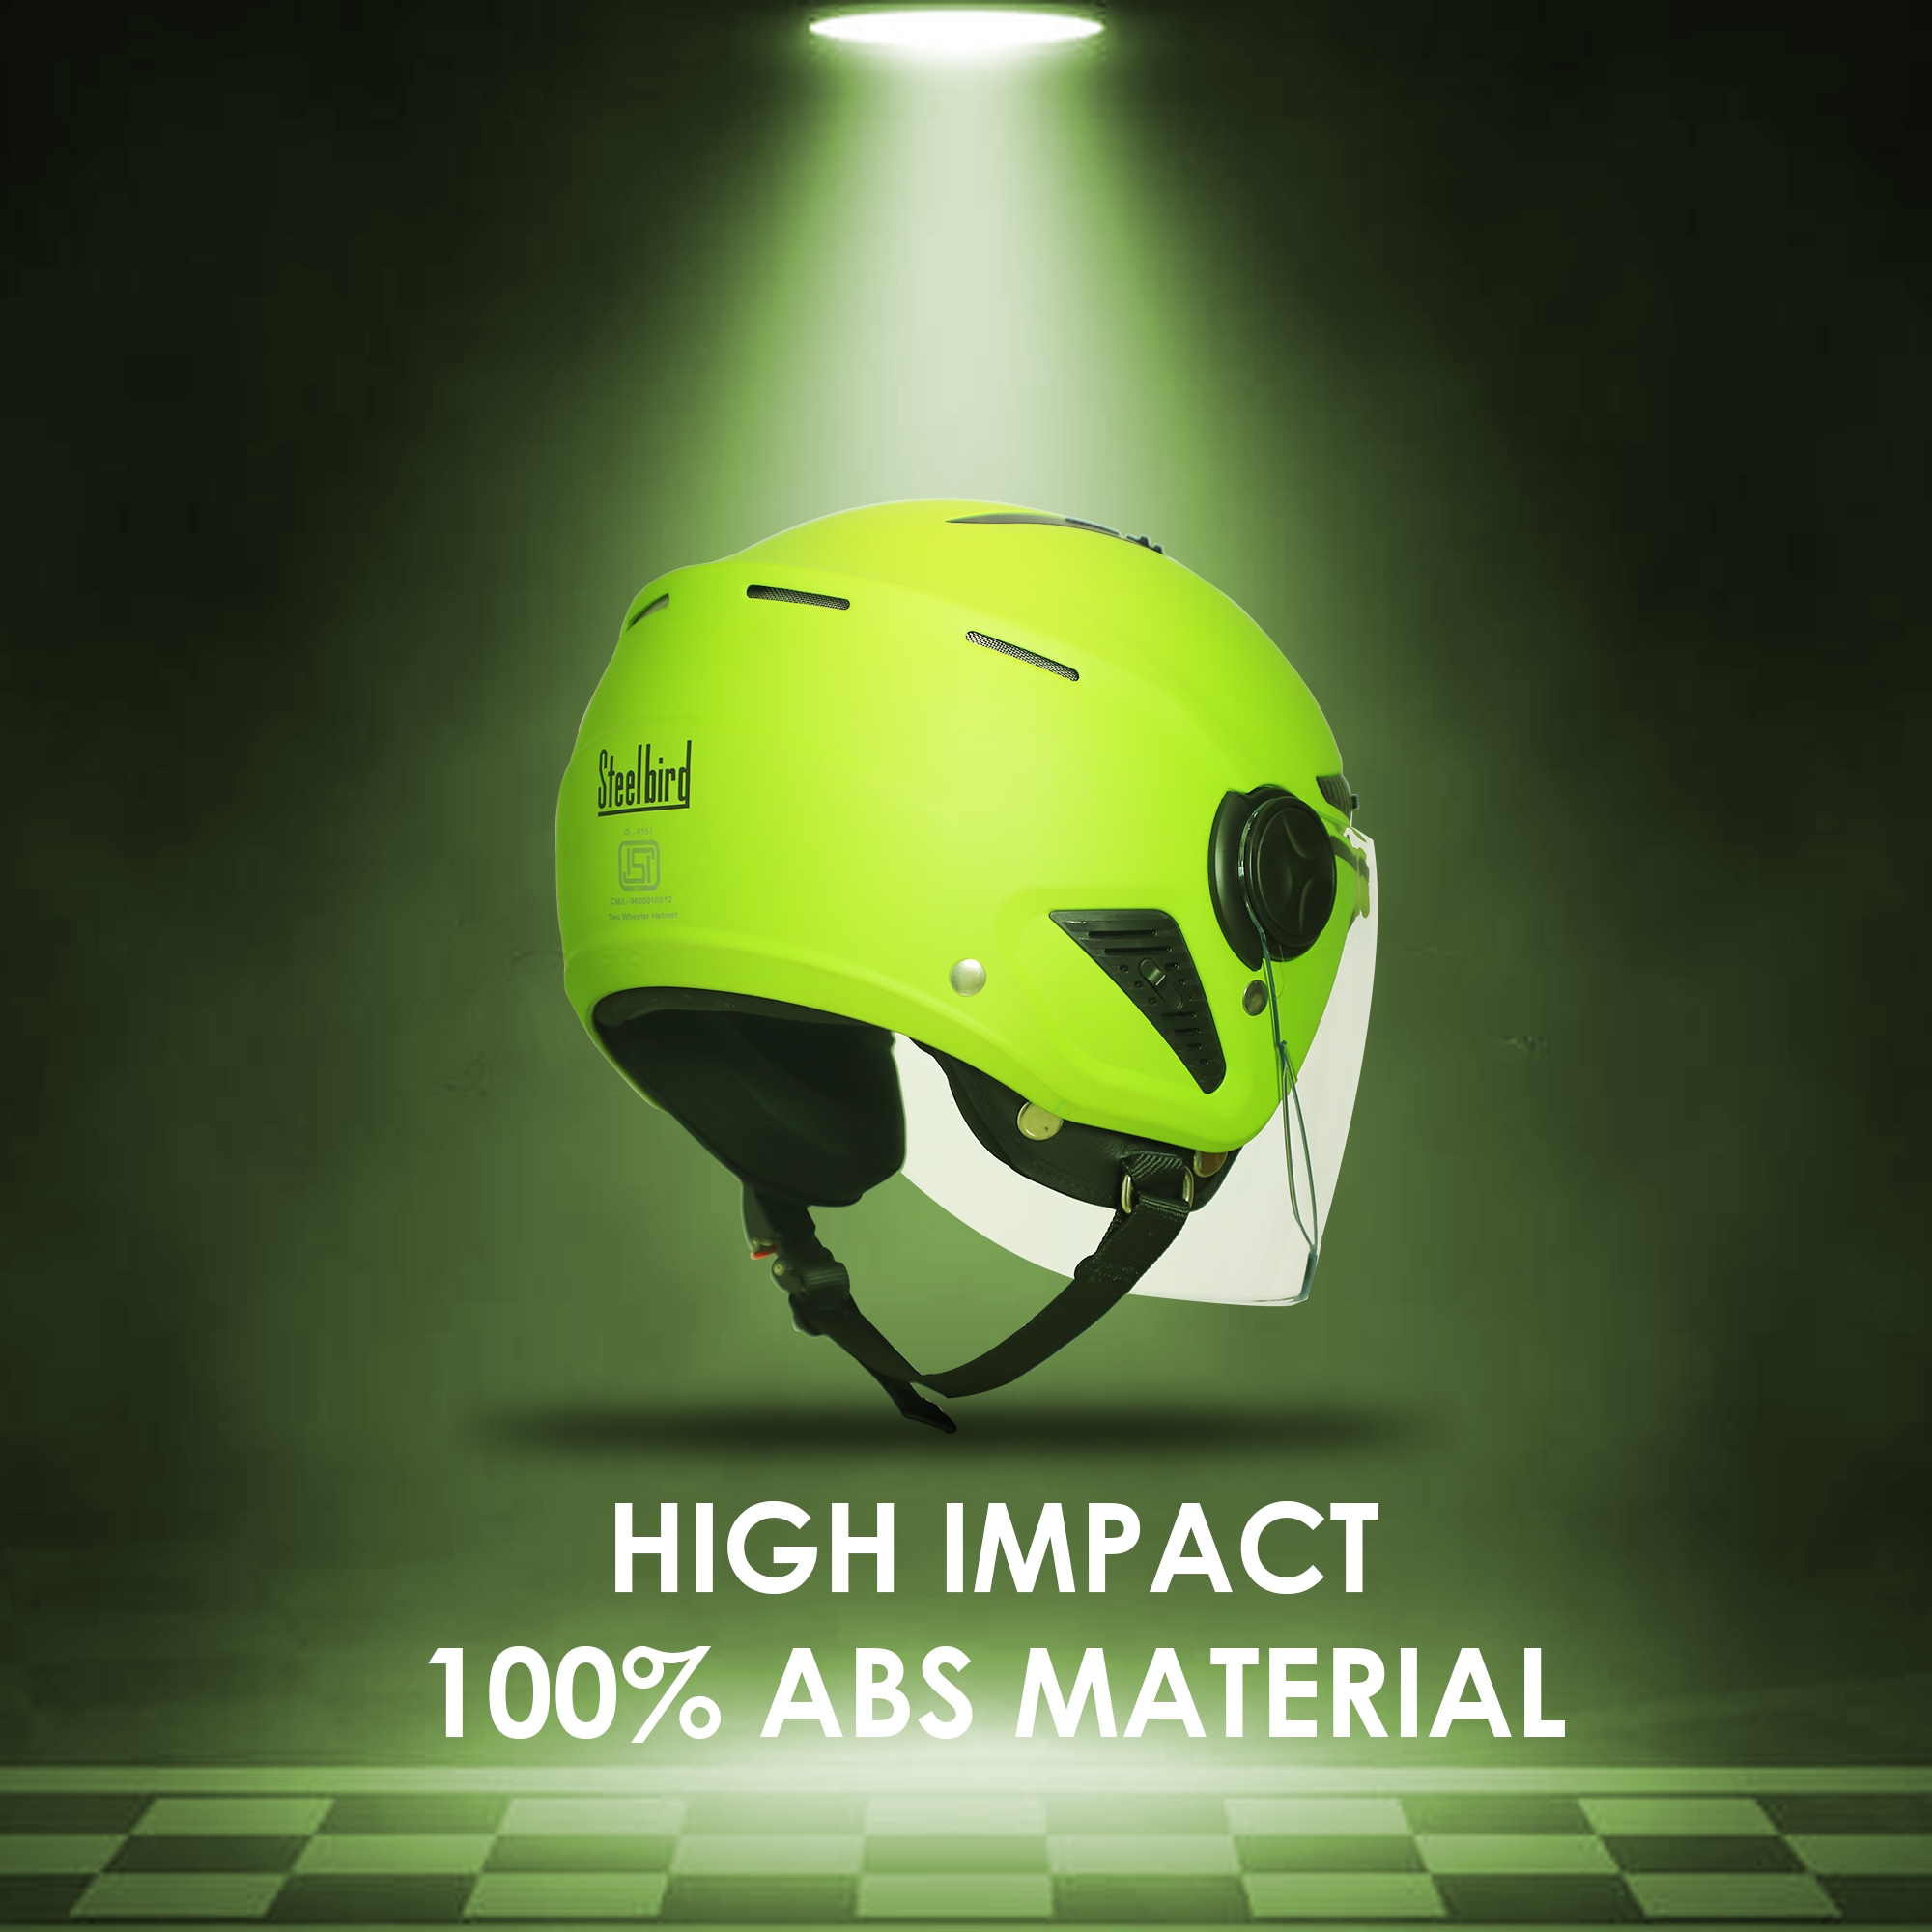 Steelbird SBH-24 Boxx ISI Certified Open Face Helmet For Men And Women (Matt Yellow Green With Clear Visor)